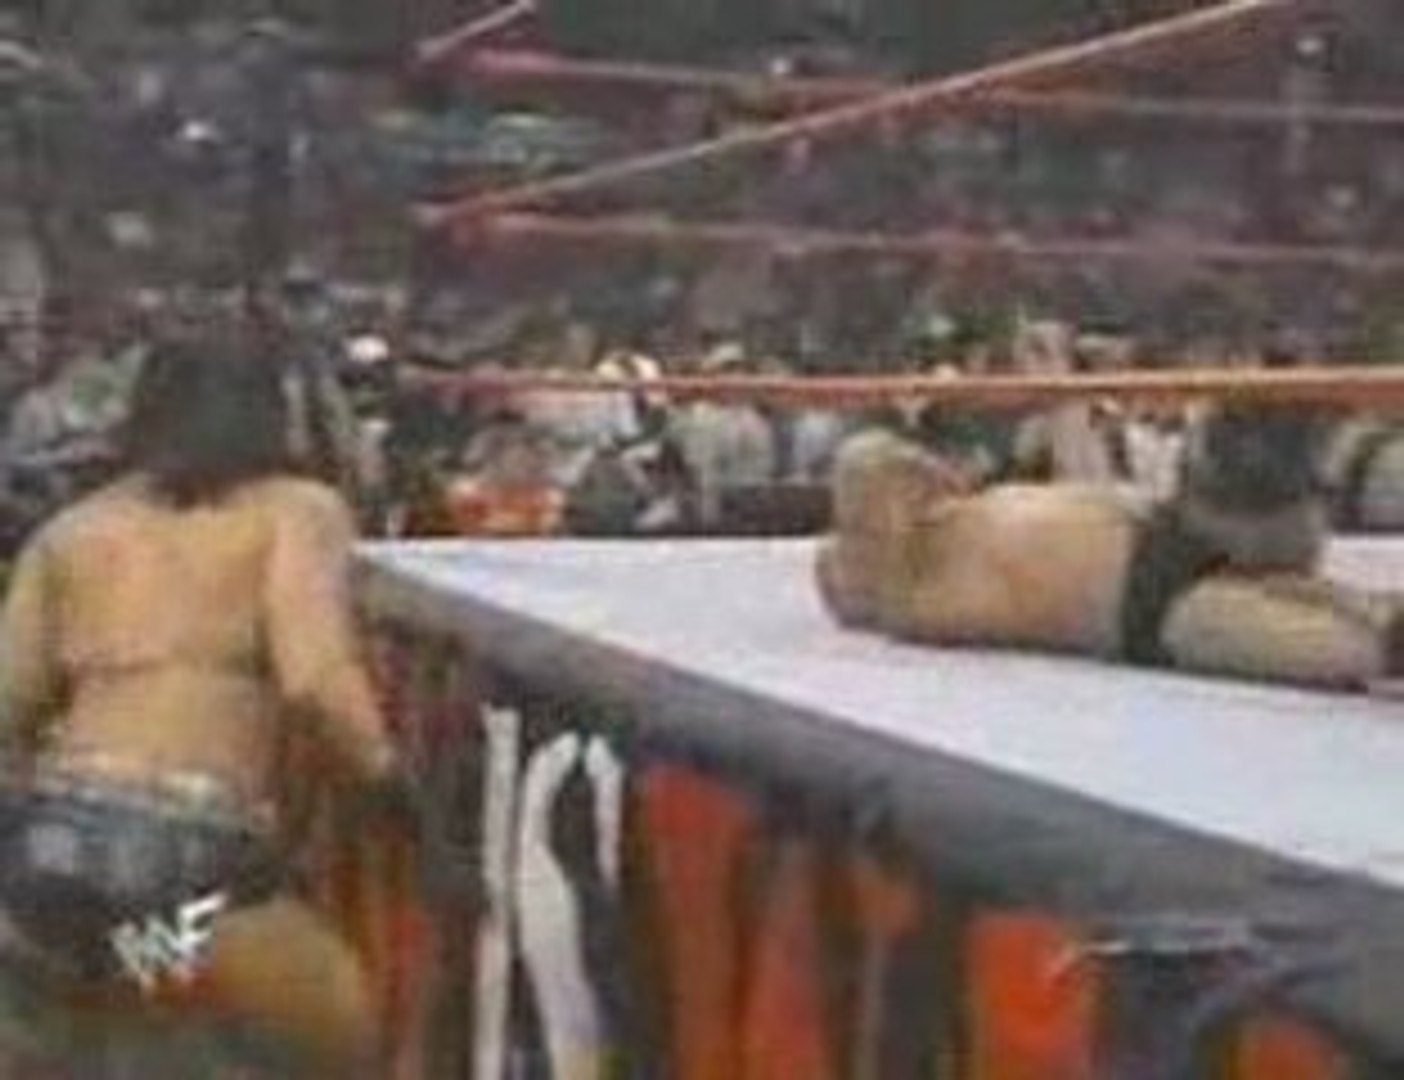 Luta Livre Americana (RTP1): 5 vs 5 [WWF Monday Night RAW